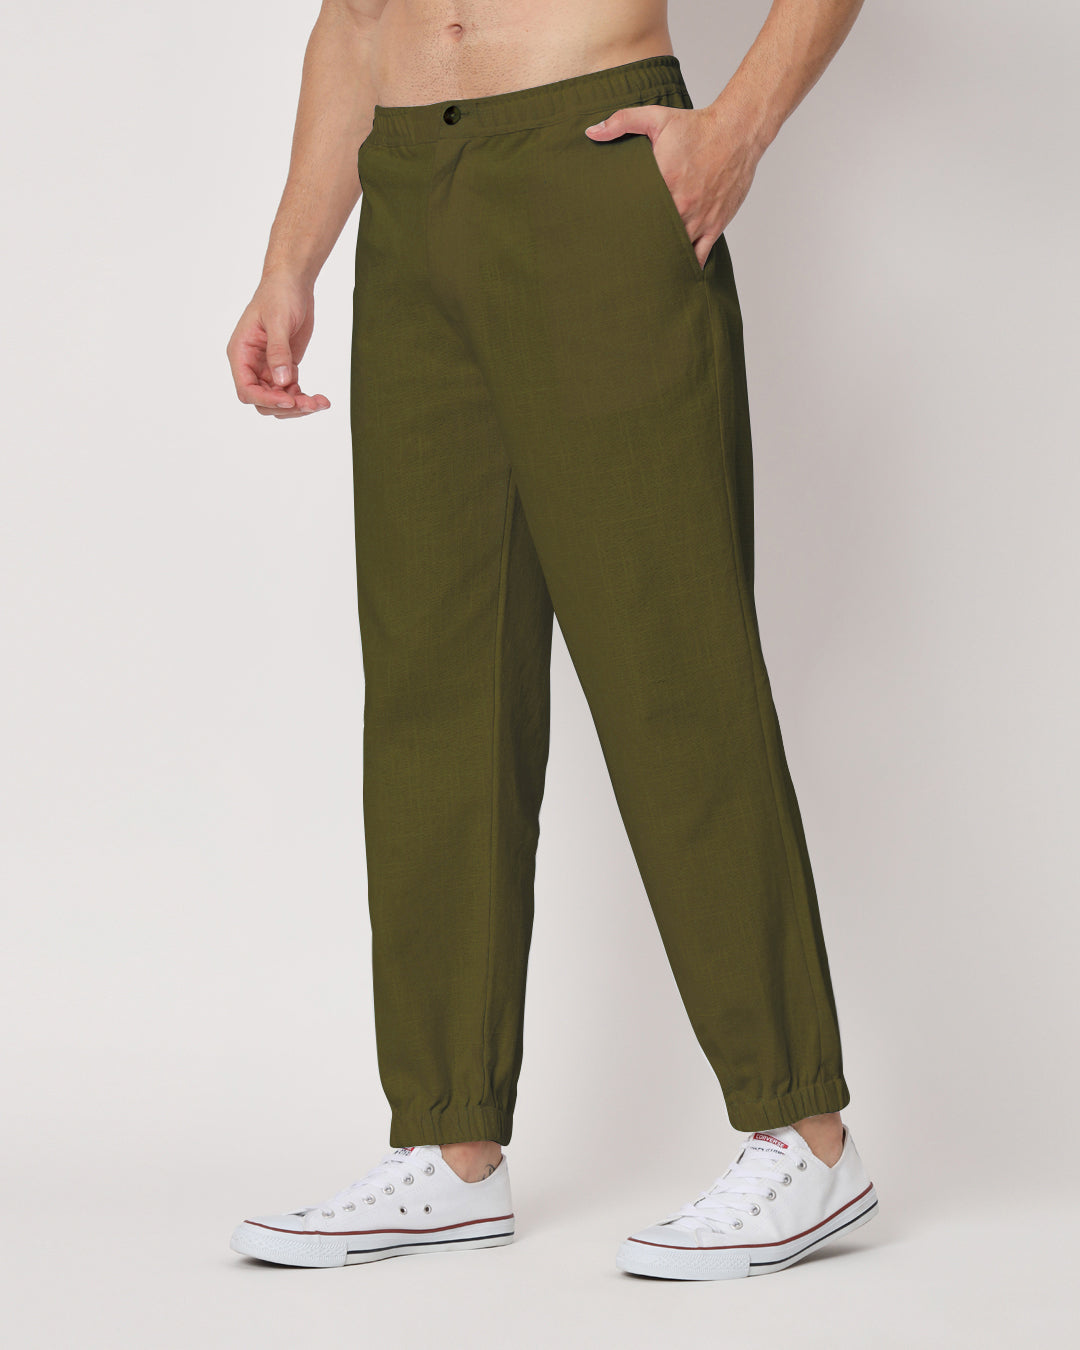 Combo: Olive Green & Grey Jog Men's Pants - Set of 2